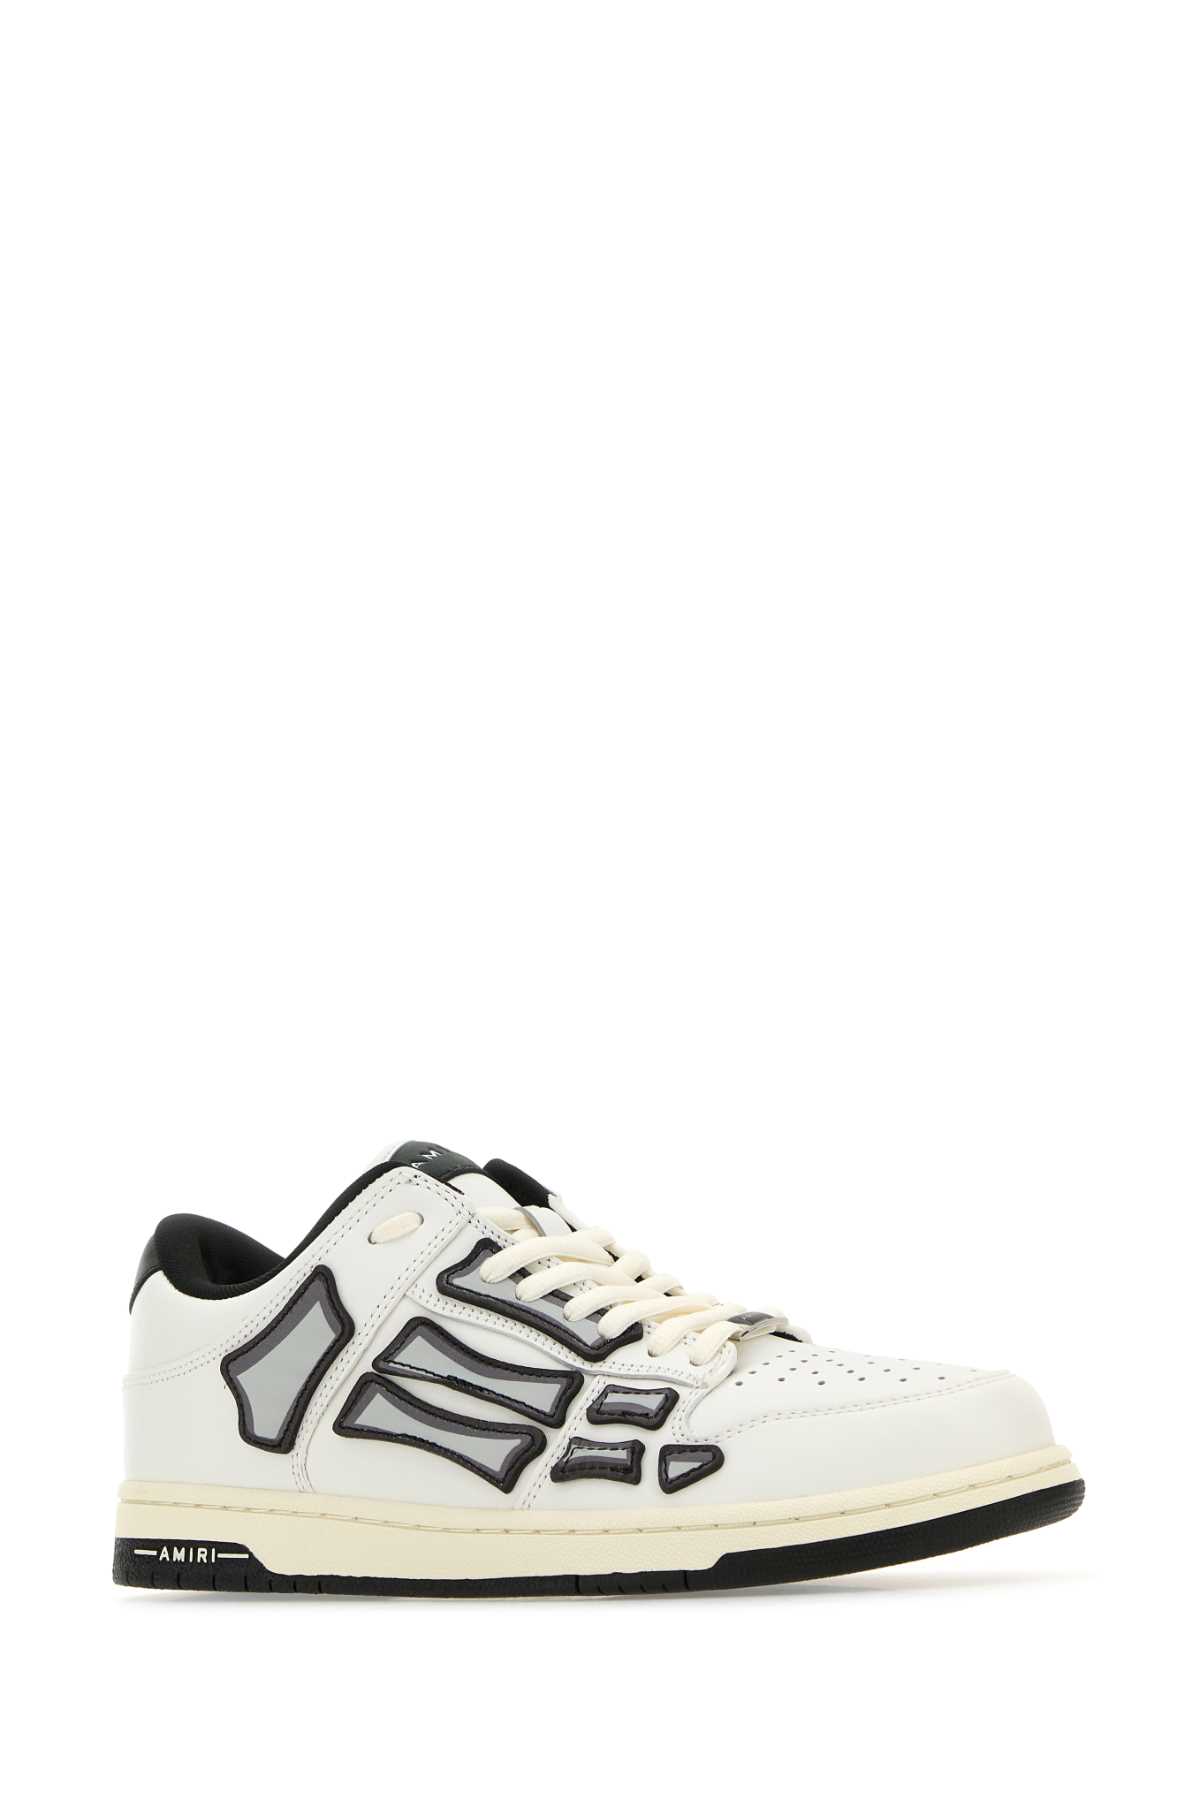 Shop Amiri White Leather Skel Sneakers In Whiteblack